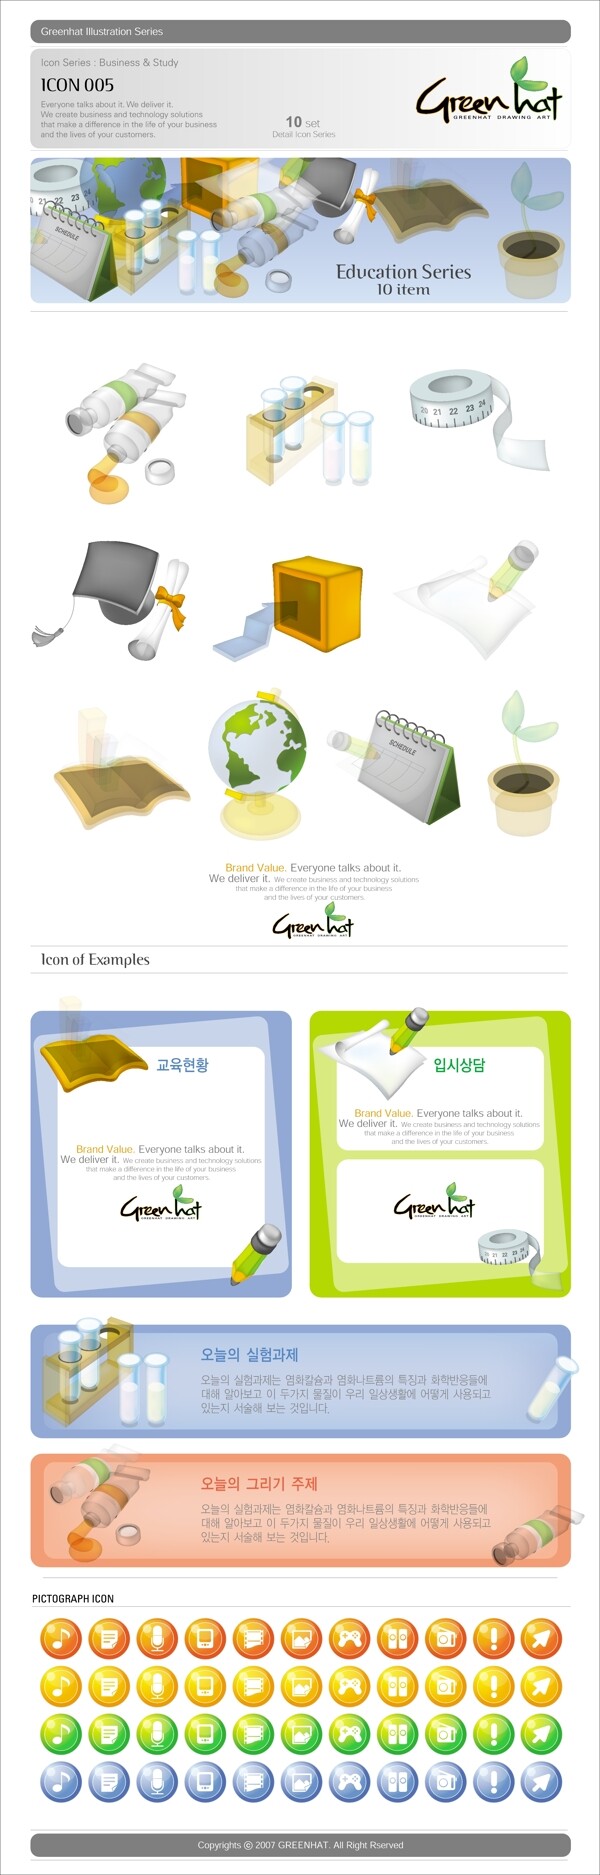 greenhat系列图标矢量素材1